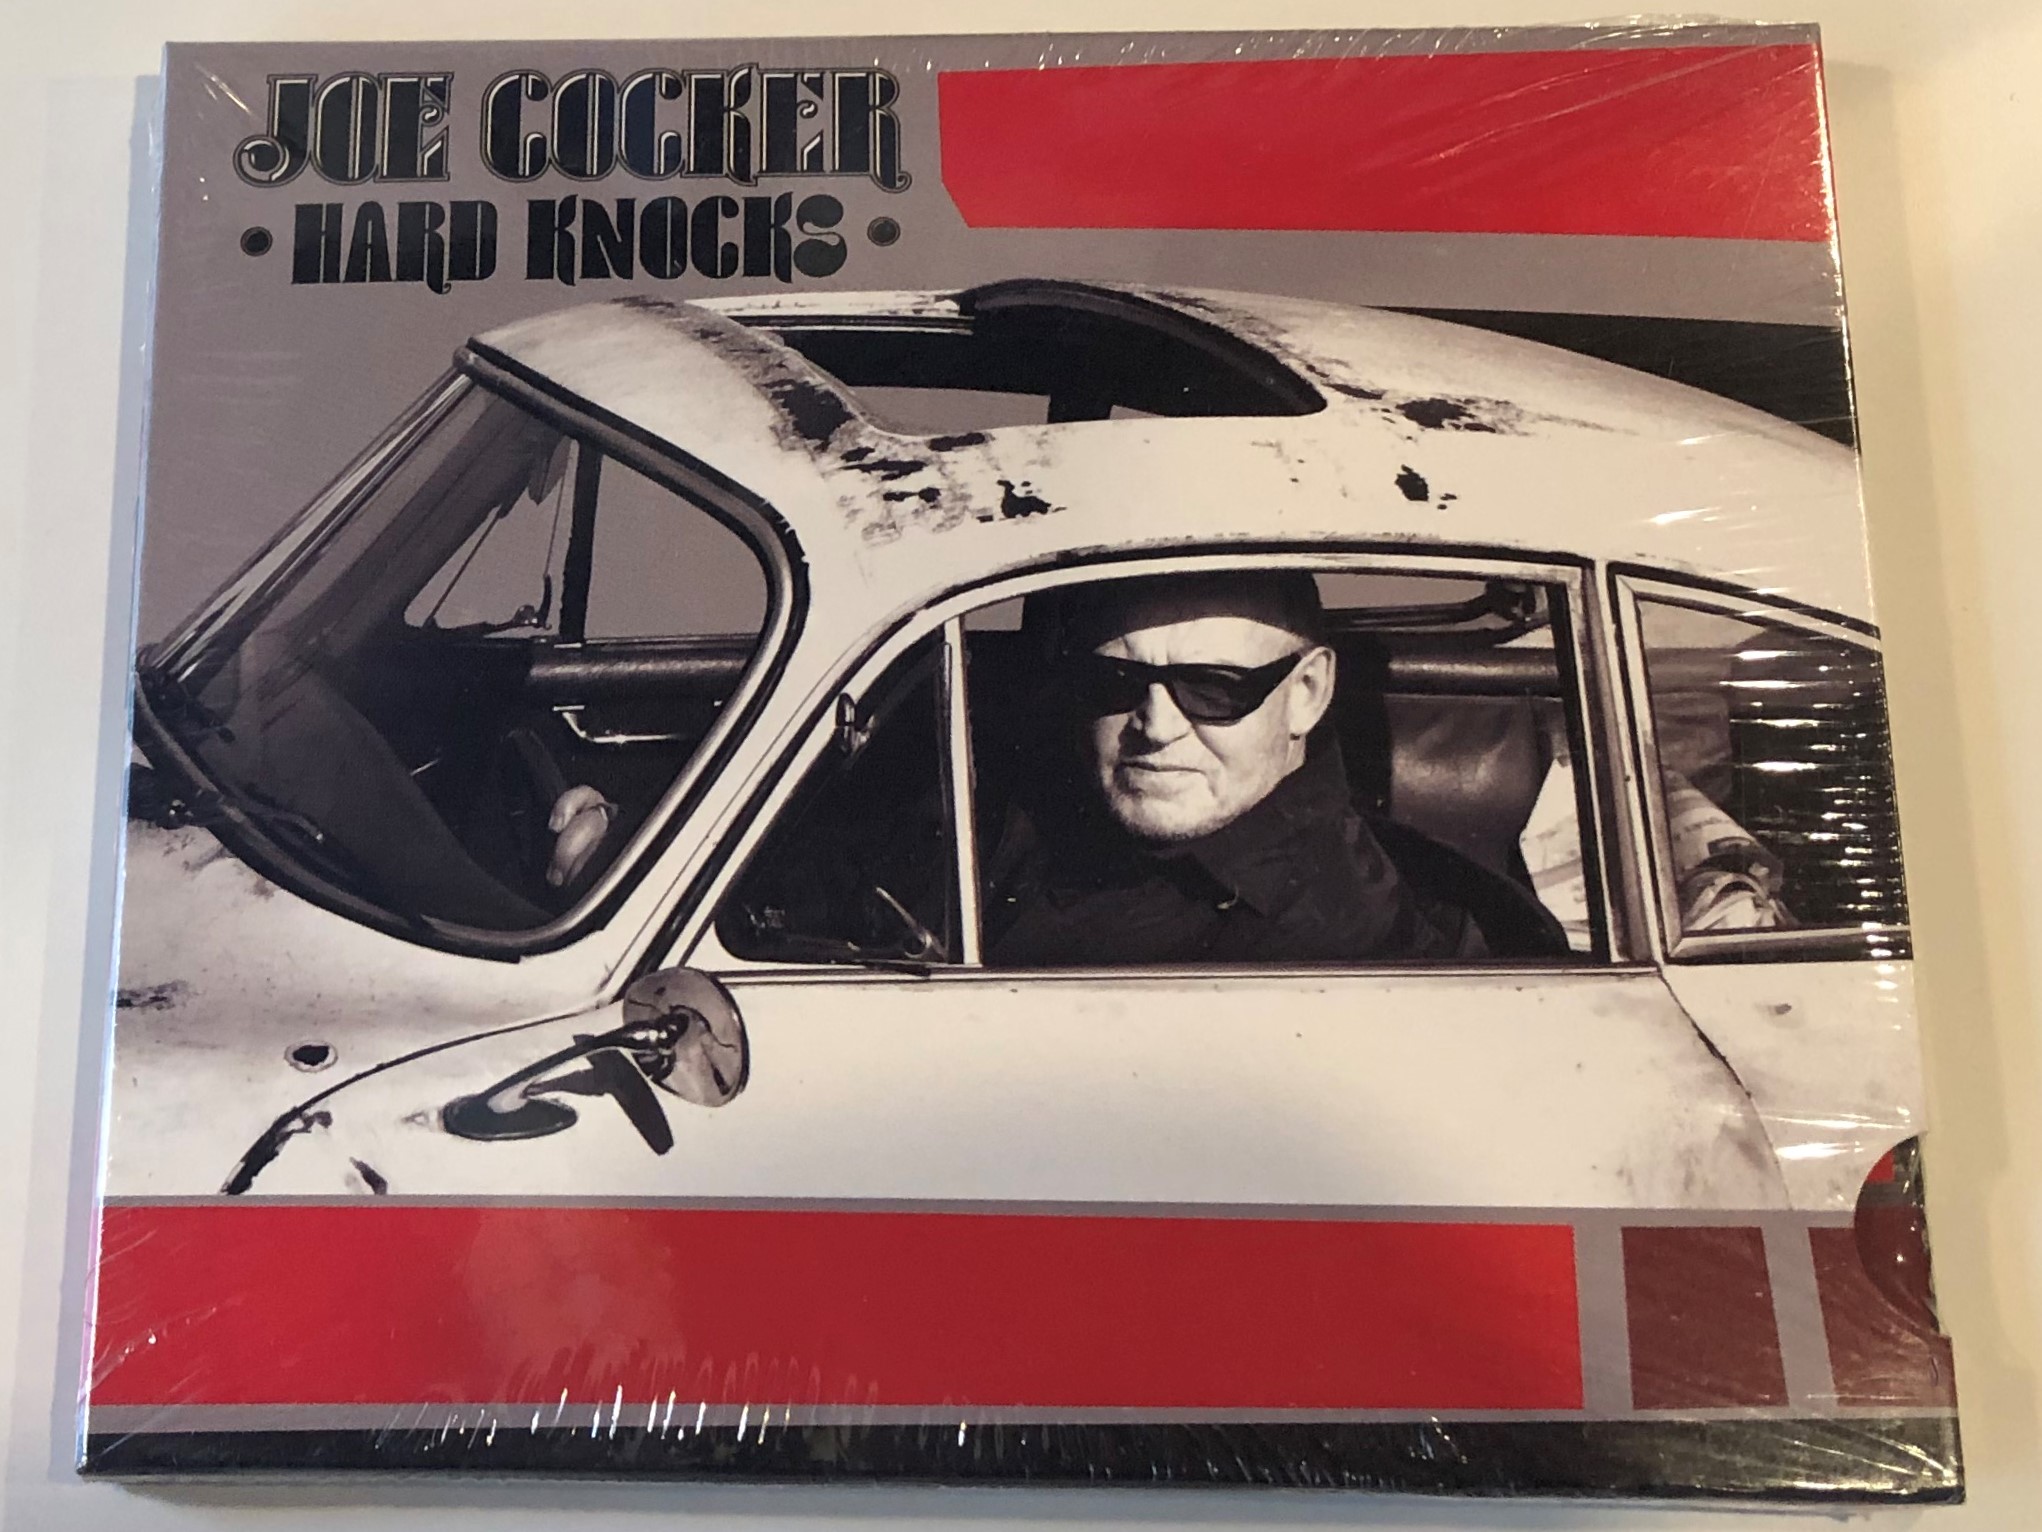 joe-cocker-hard-knocks-sony-music-audio-cd-2010-886977626524-1-.jpg